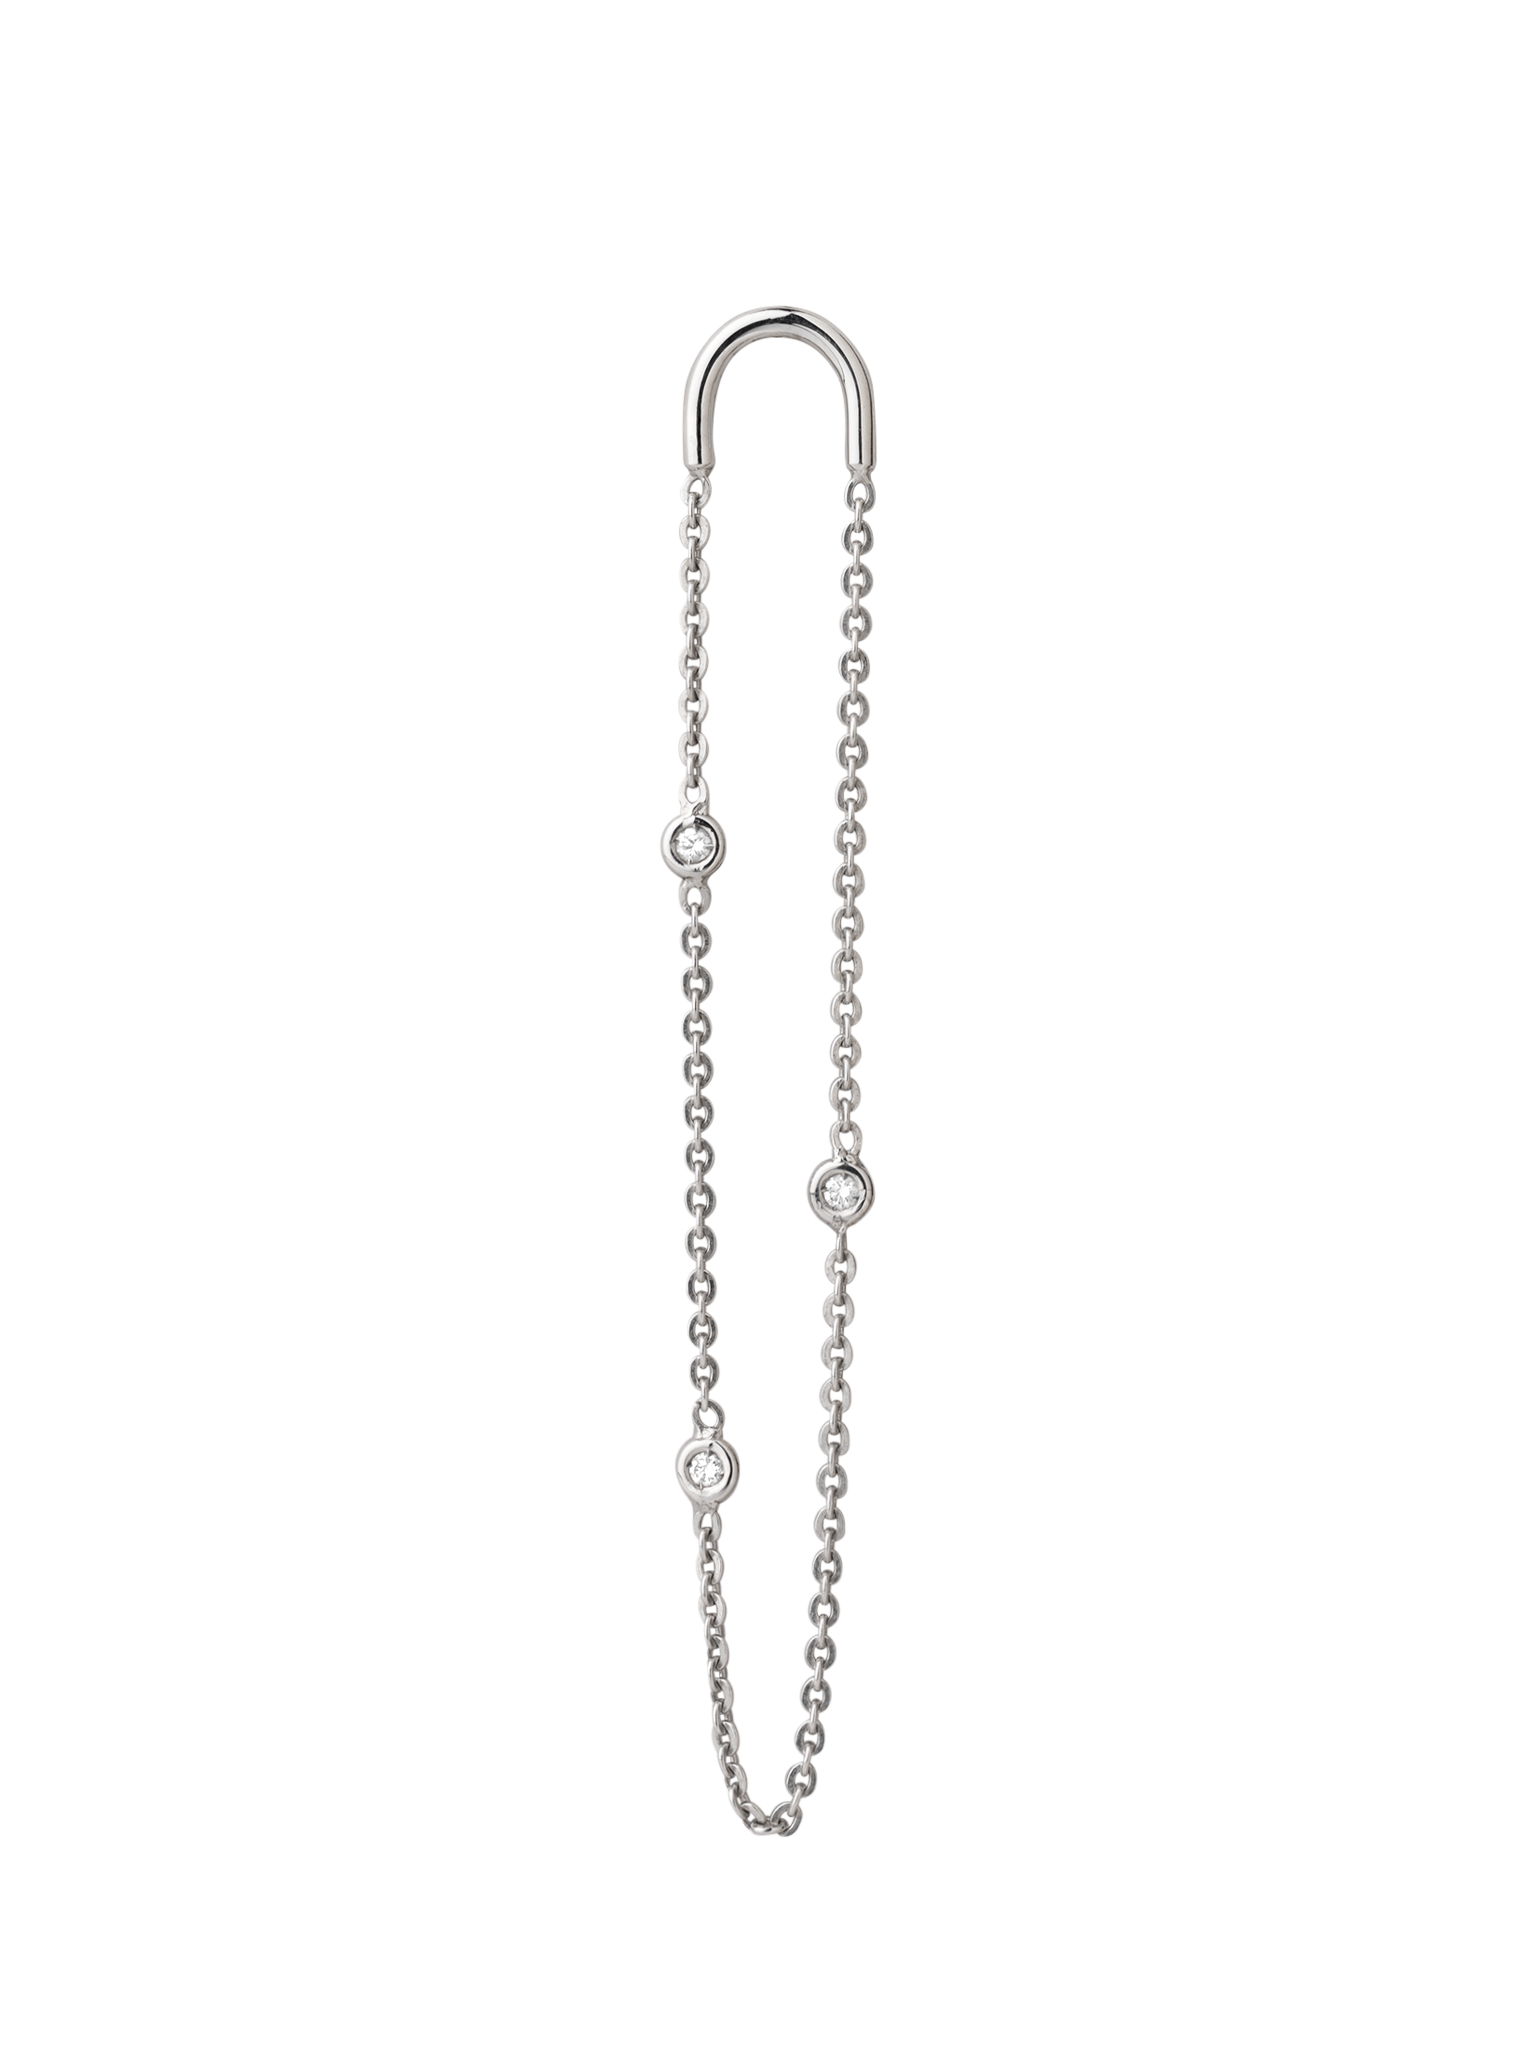 Norah long single earring in 18k white gold with 3 white diamonds